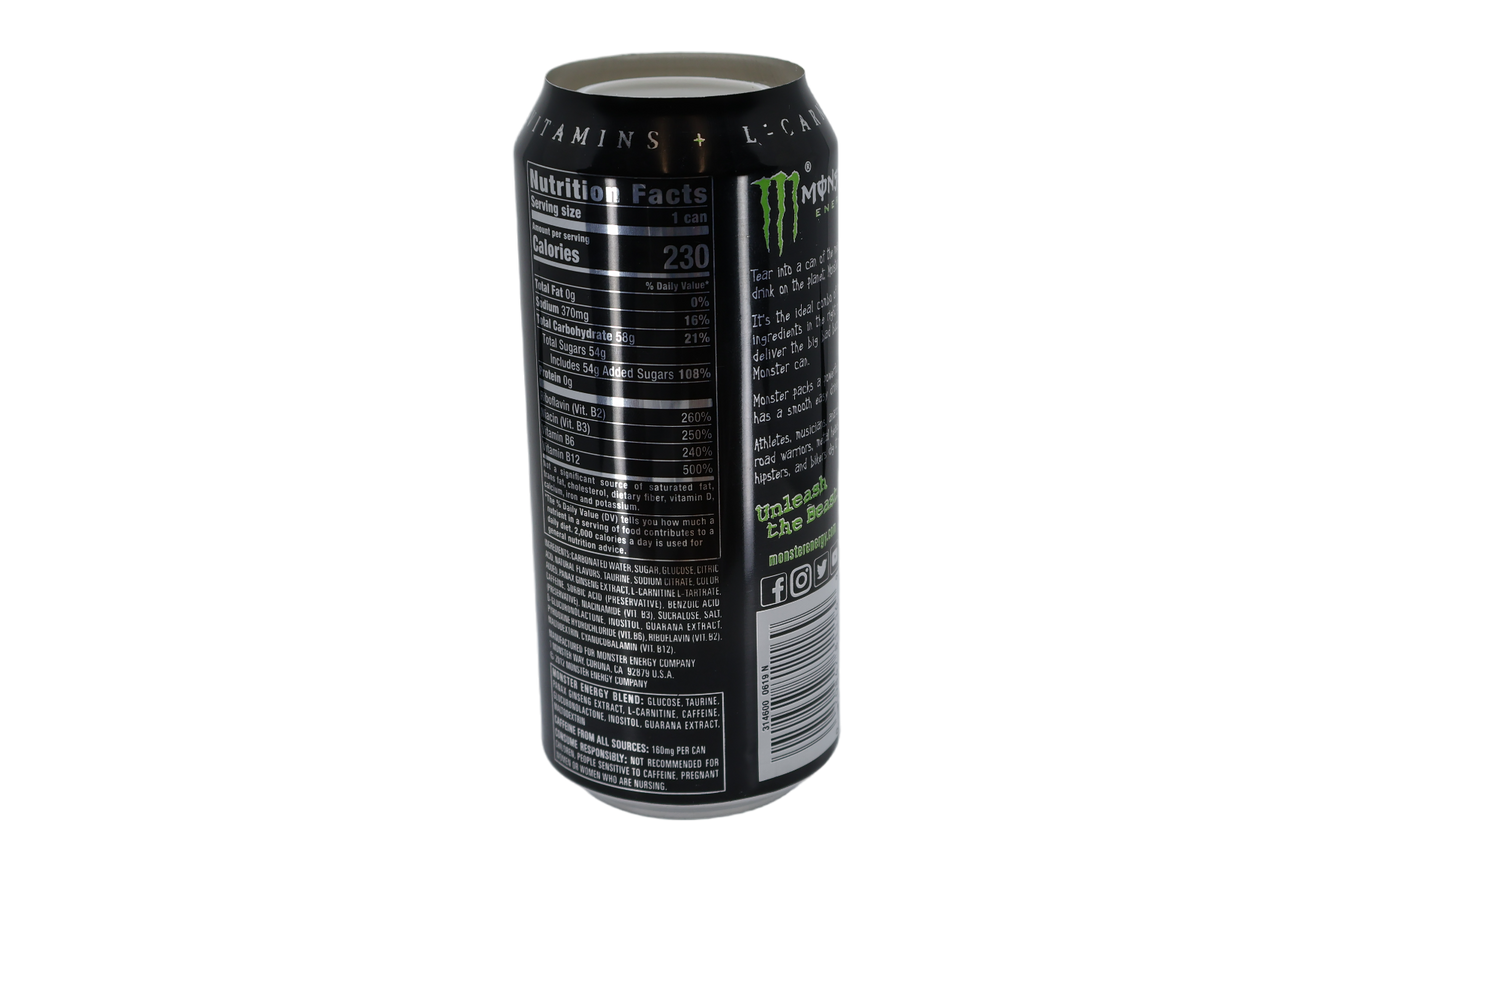 Monster Energy Drink Stash Can